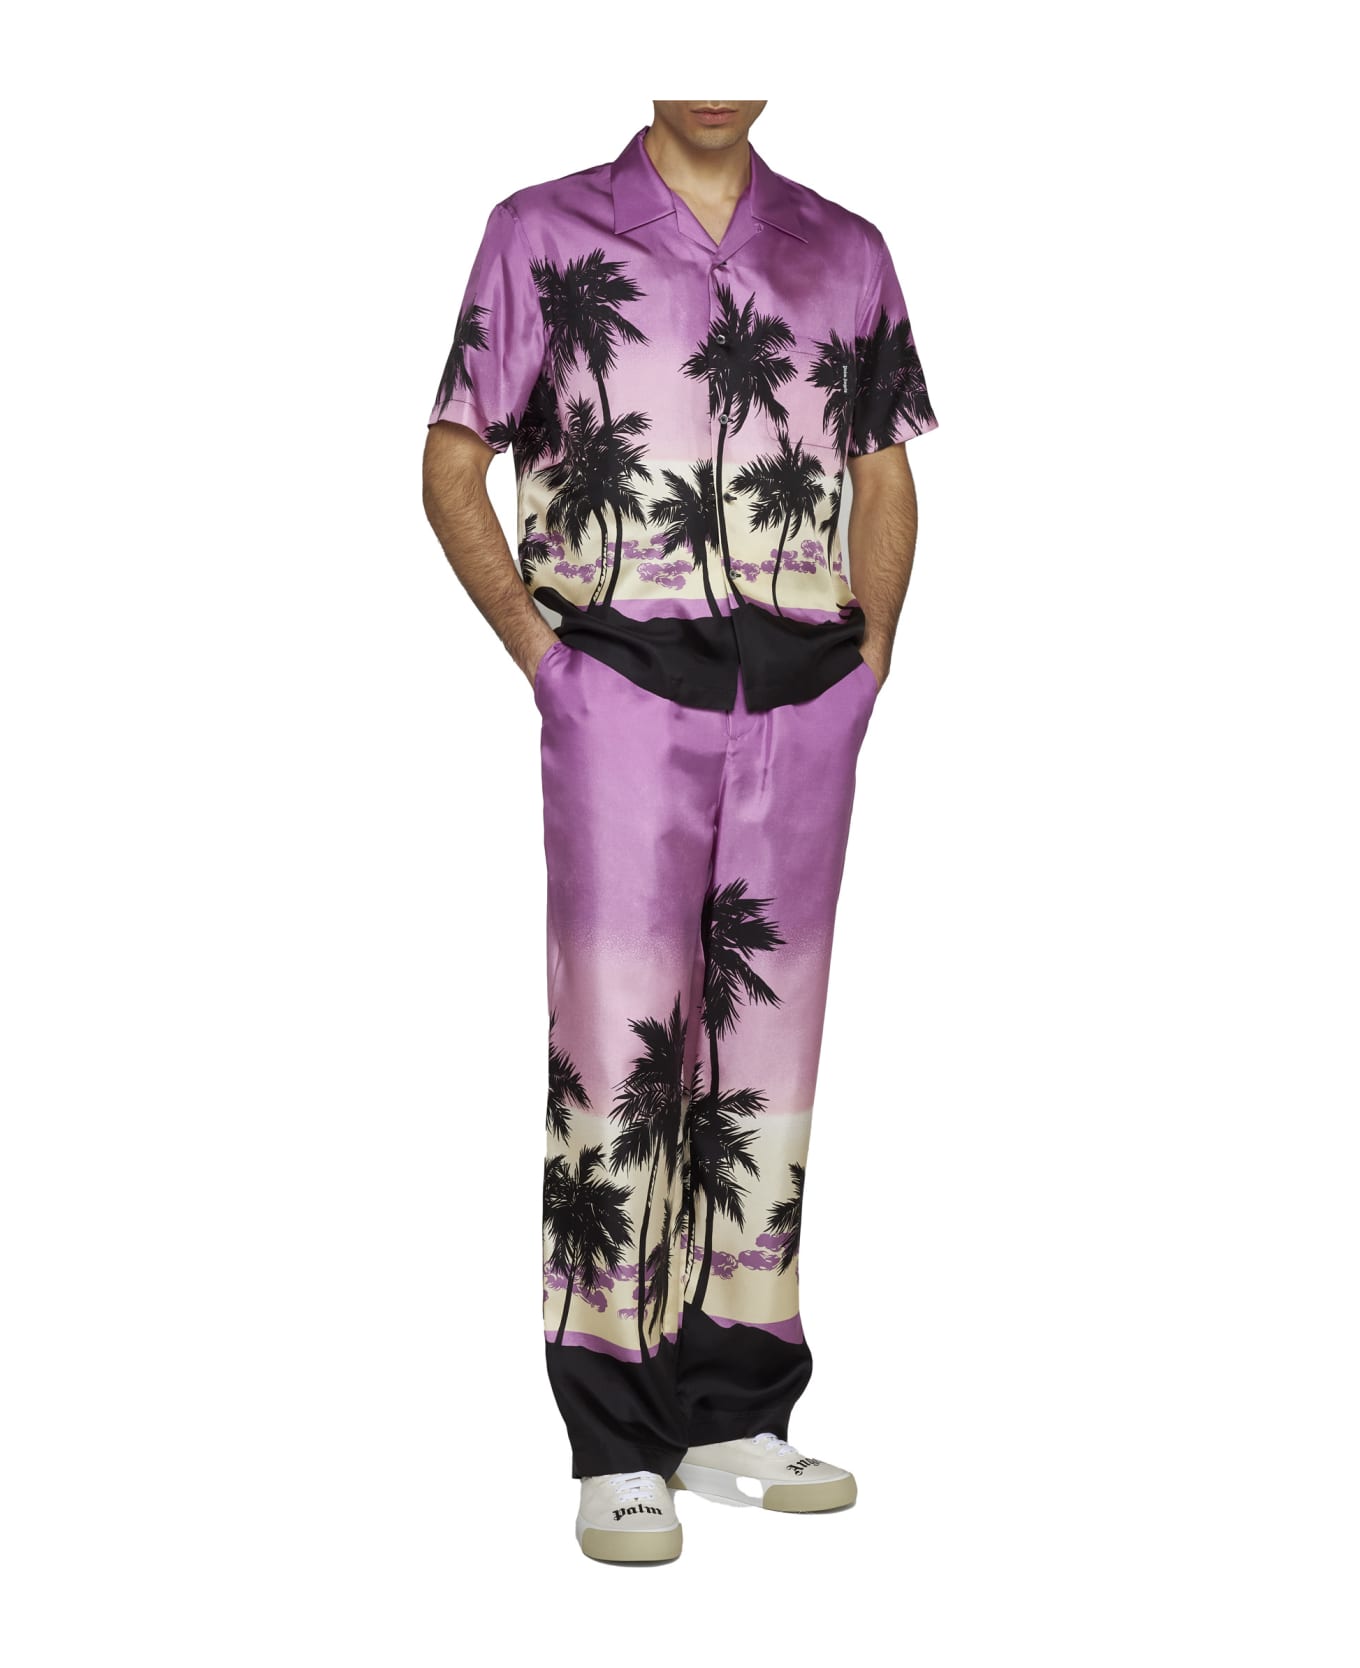 Palm Angels Bowling Shirt - Violet